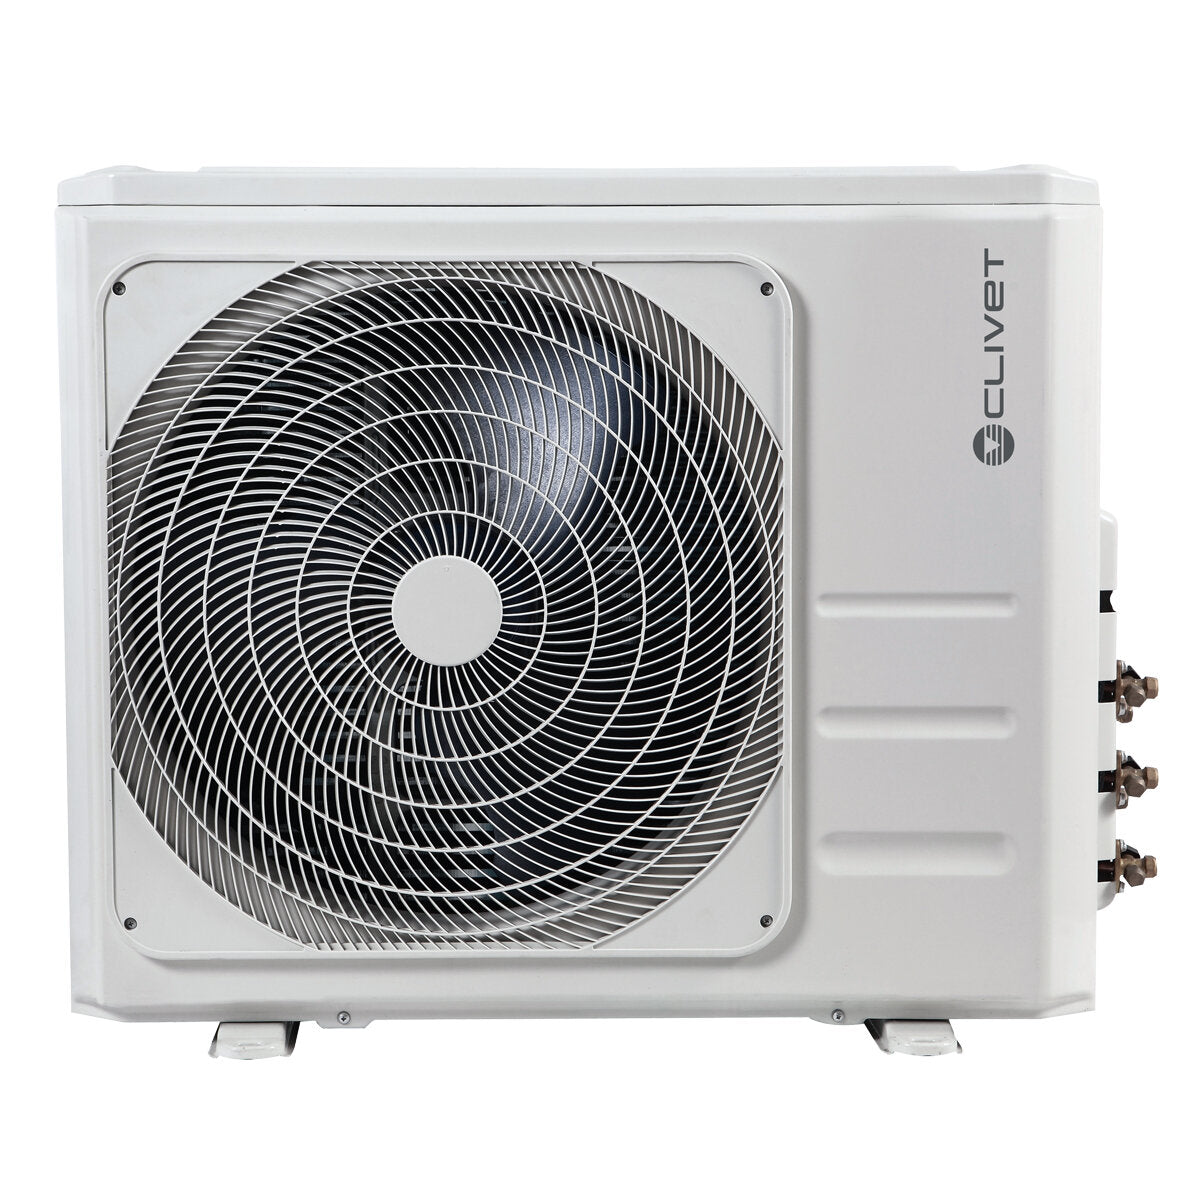 Clivet Essential air conditioner 2 split panels 9000 + 12000 + 12000 + 18000 BTU inverter A ++ outdoor unit 10.5 kW